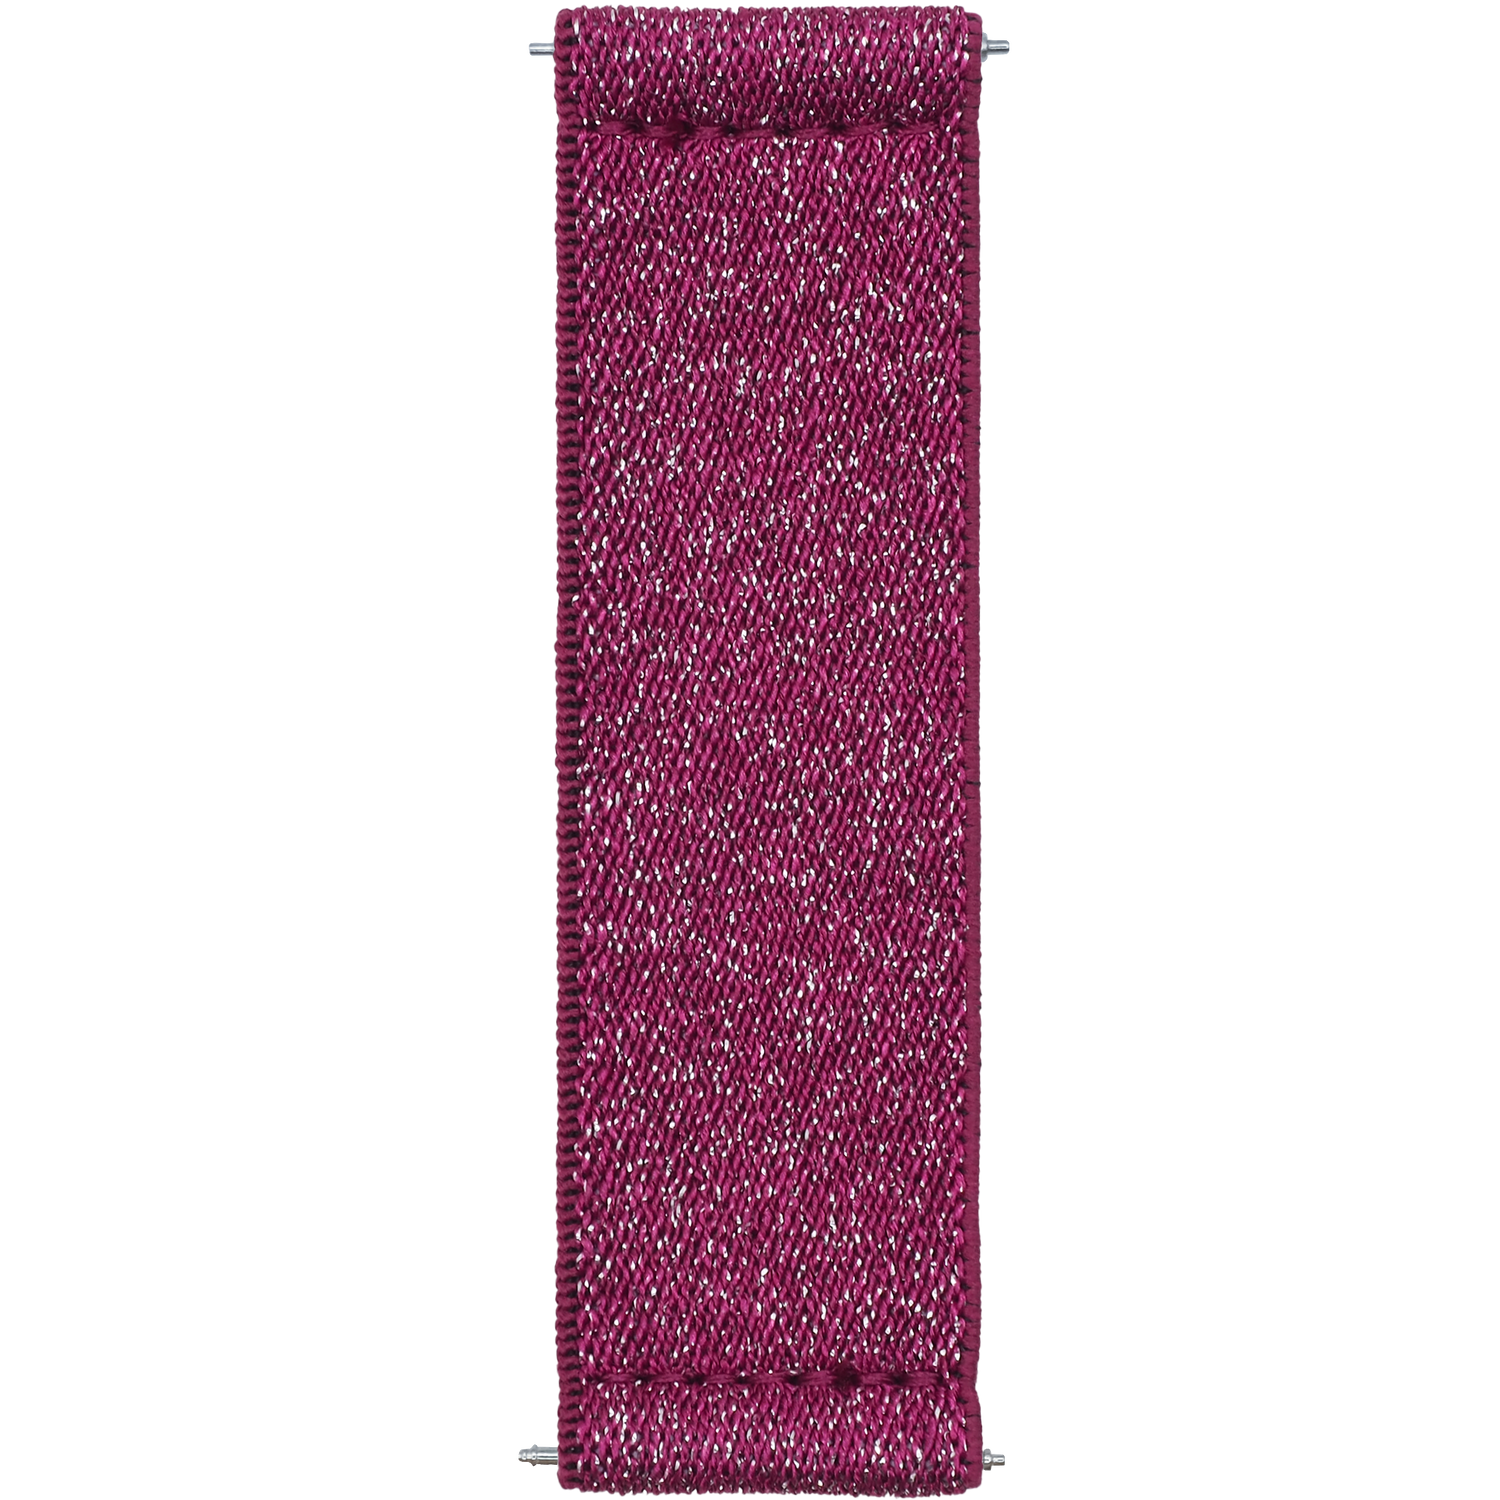 PRO Strap - Cranberry Glitter Elastic